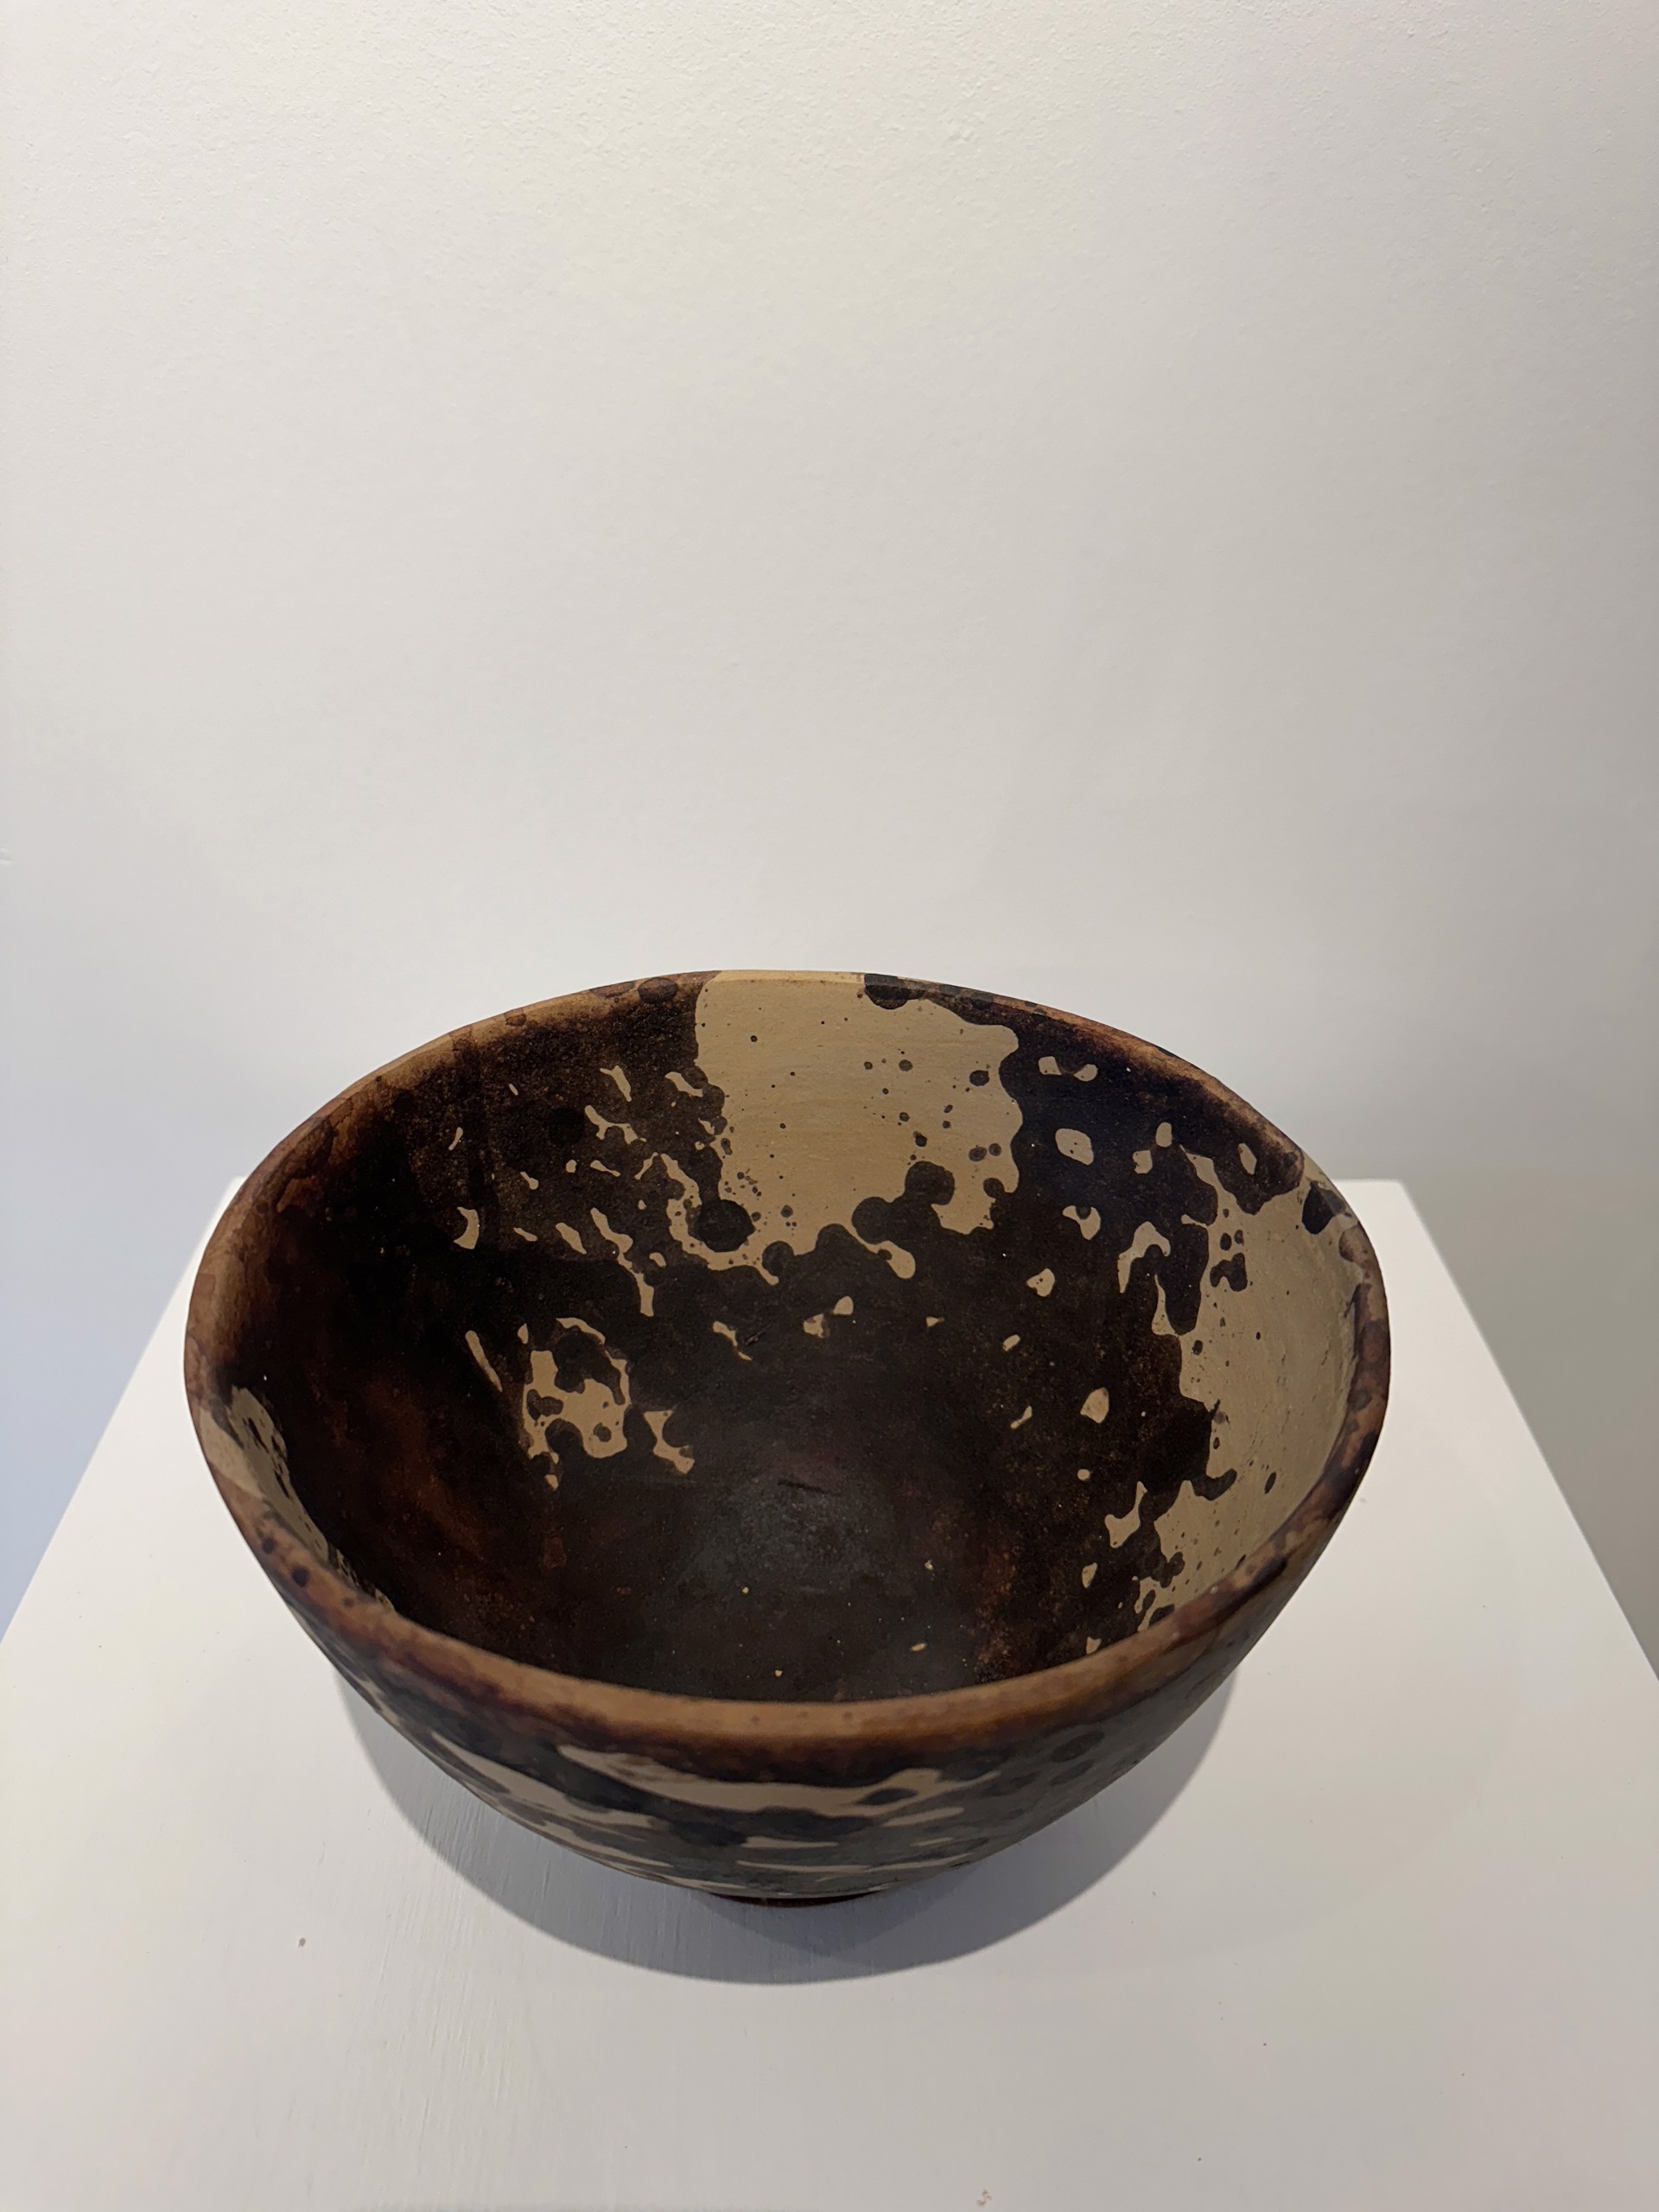 Medium Bowl by Colectivo 1050